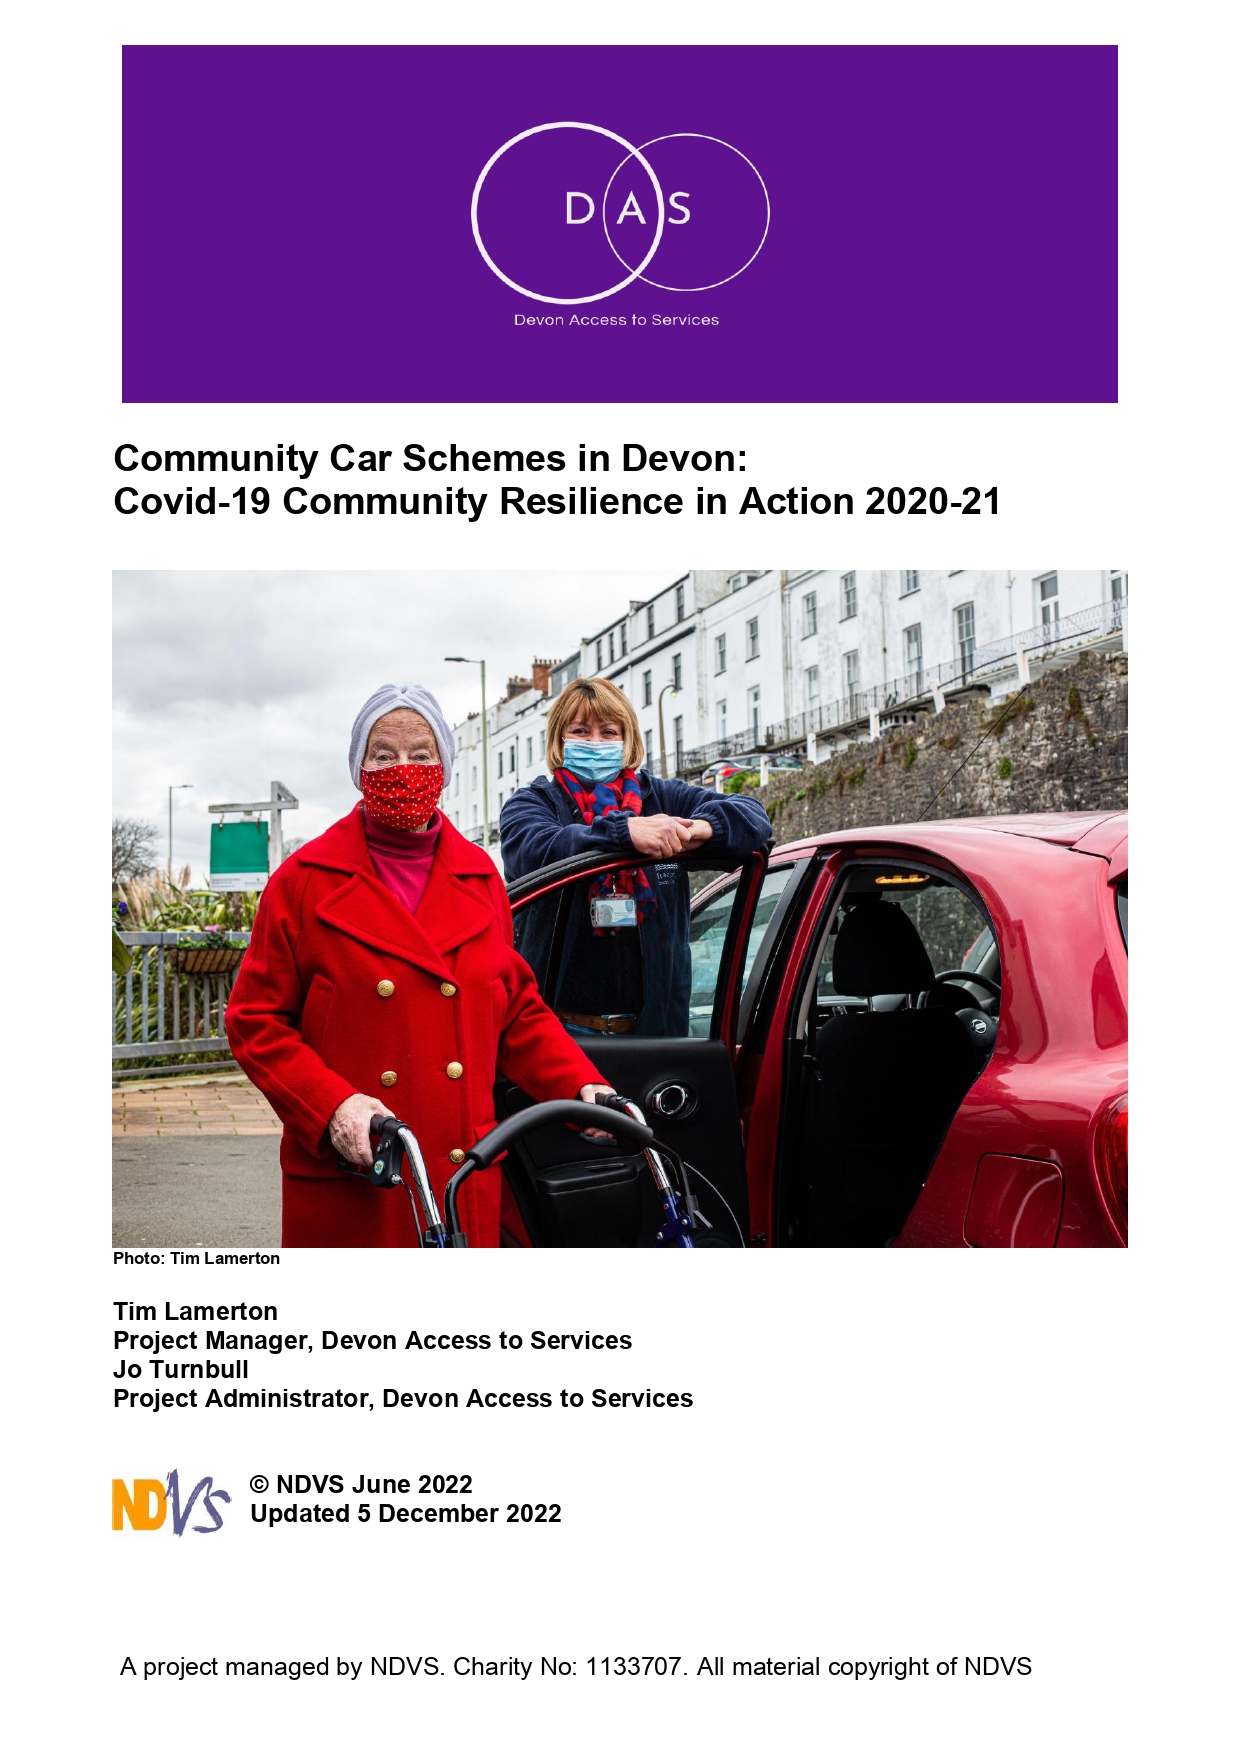 Community-Resiliance-Covid19-and-Devon-Car-Schemes-2020-21-1_page-0001[1]